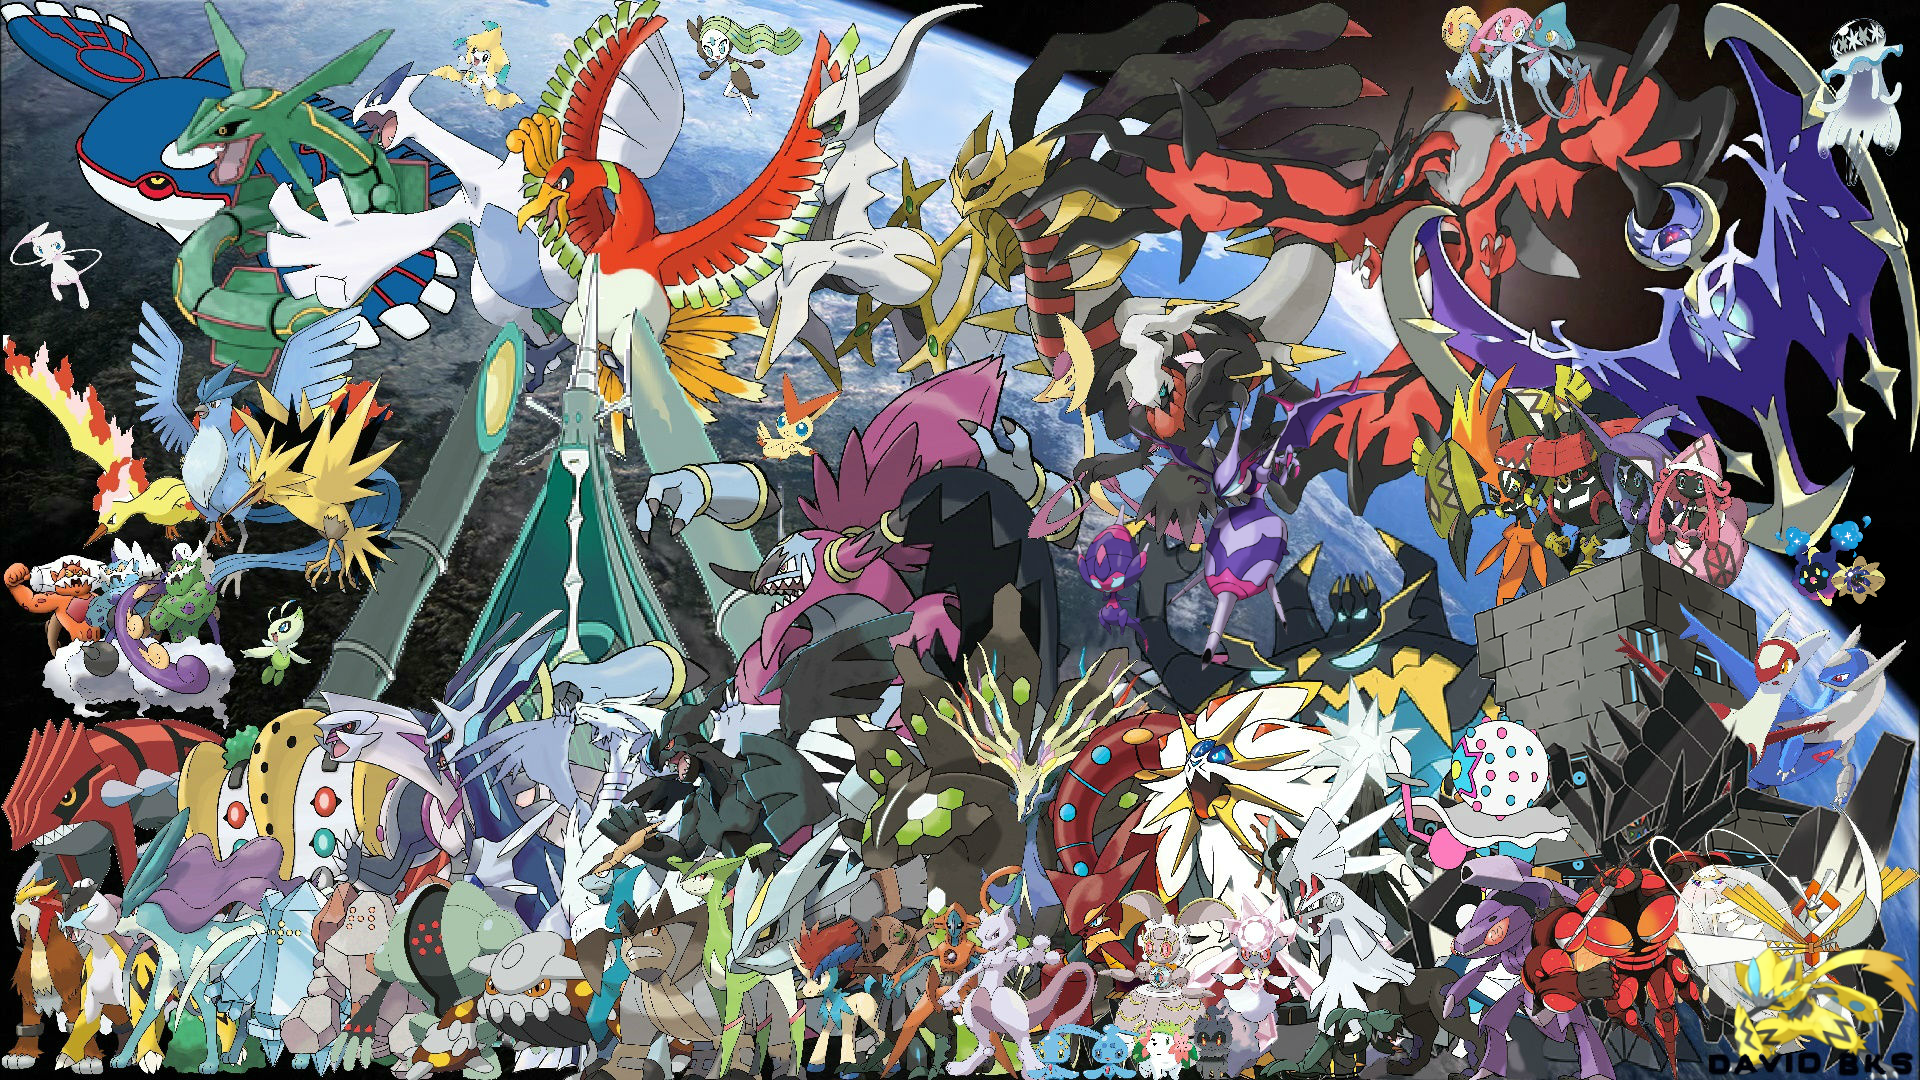 All Legendary Pokemon/Todos losPokemon Legendarios by